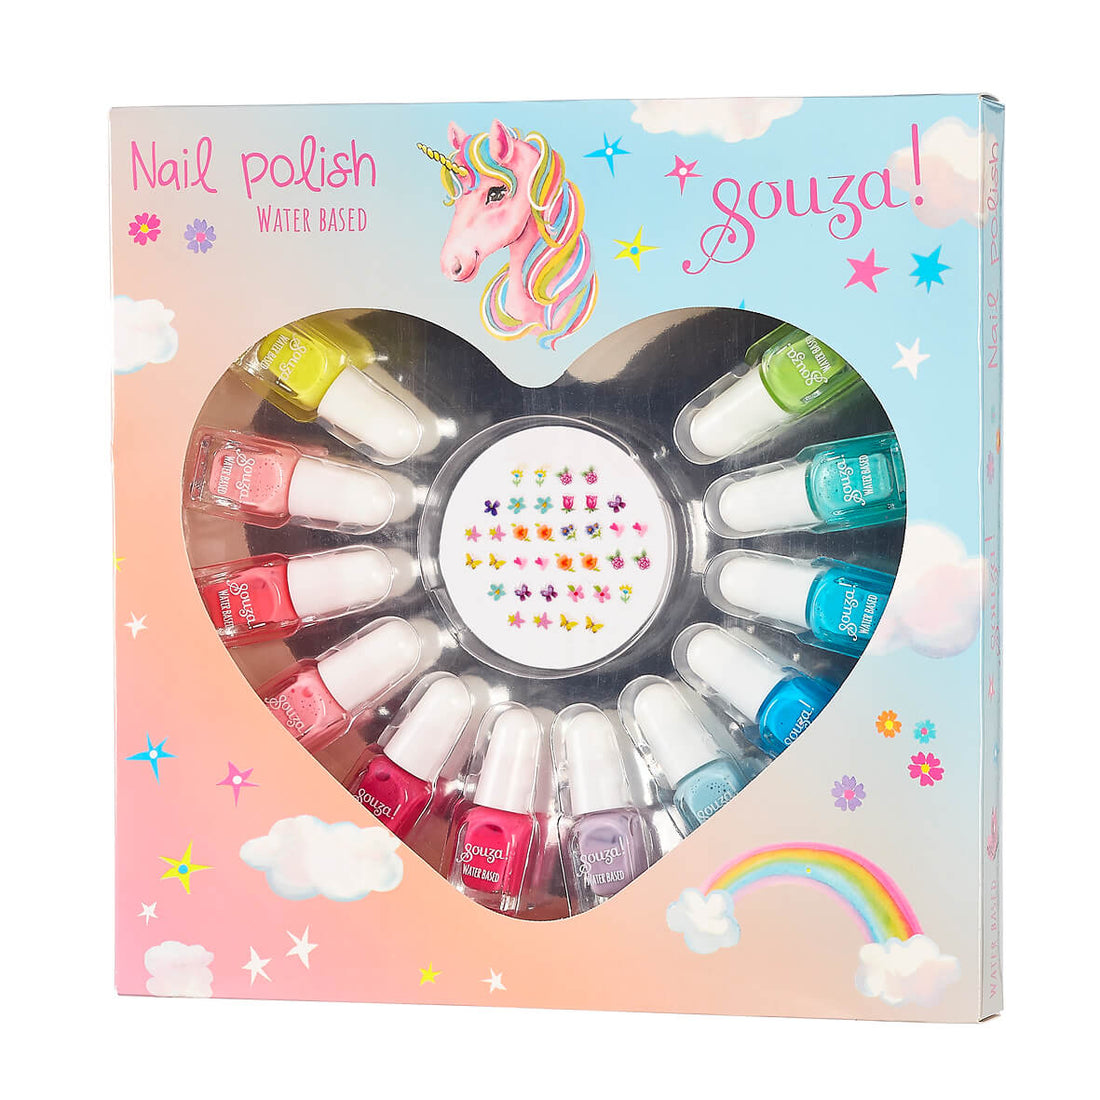 Beauty set: 12 nail polishes and nail stickers (Souza)